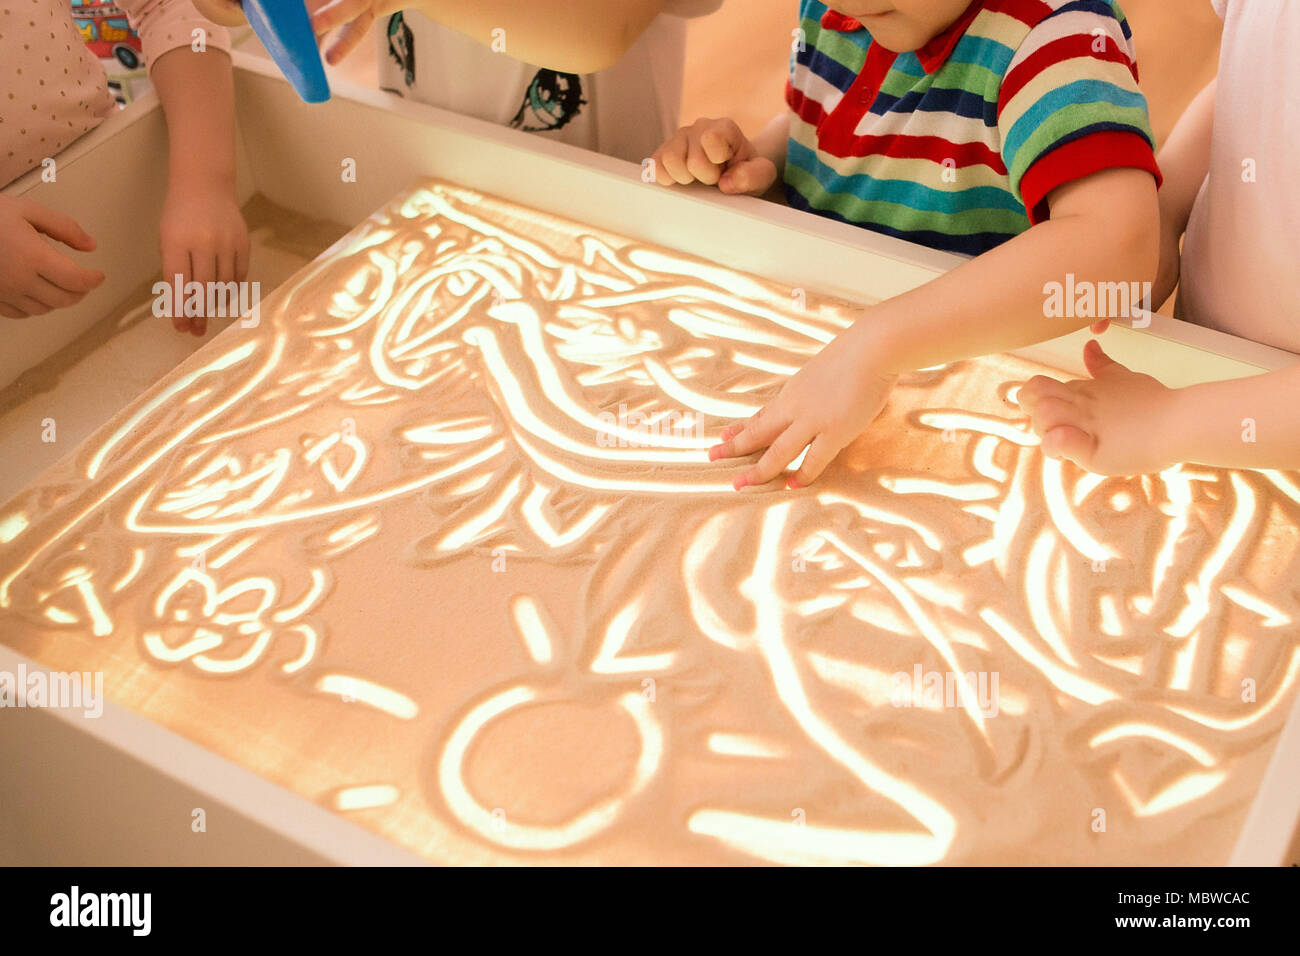 Sand Drawing Light Box | Sand Painting Set | Sand Art Light Box for Kids